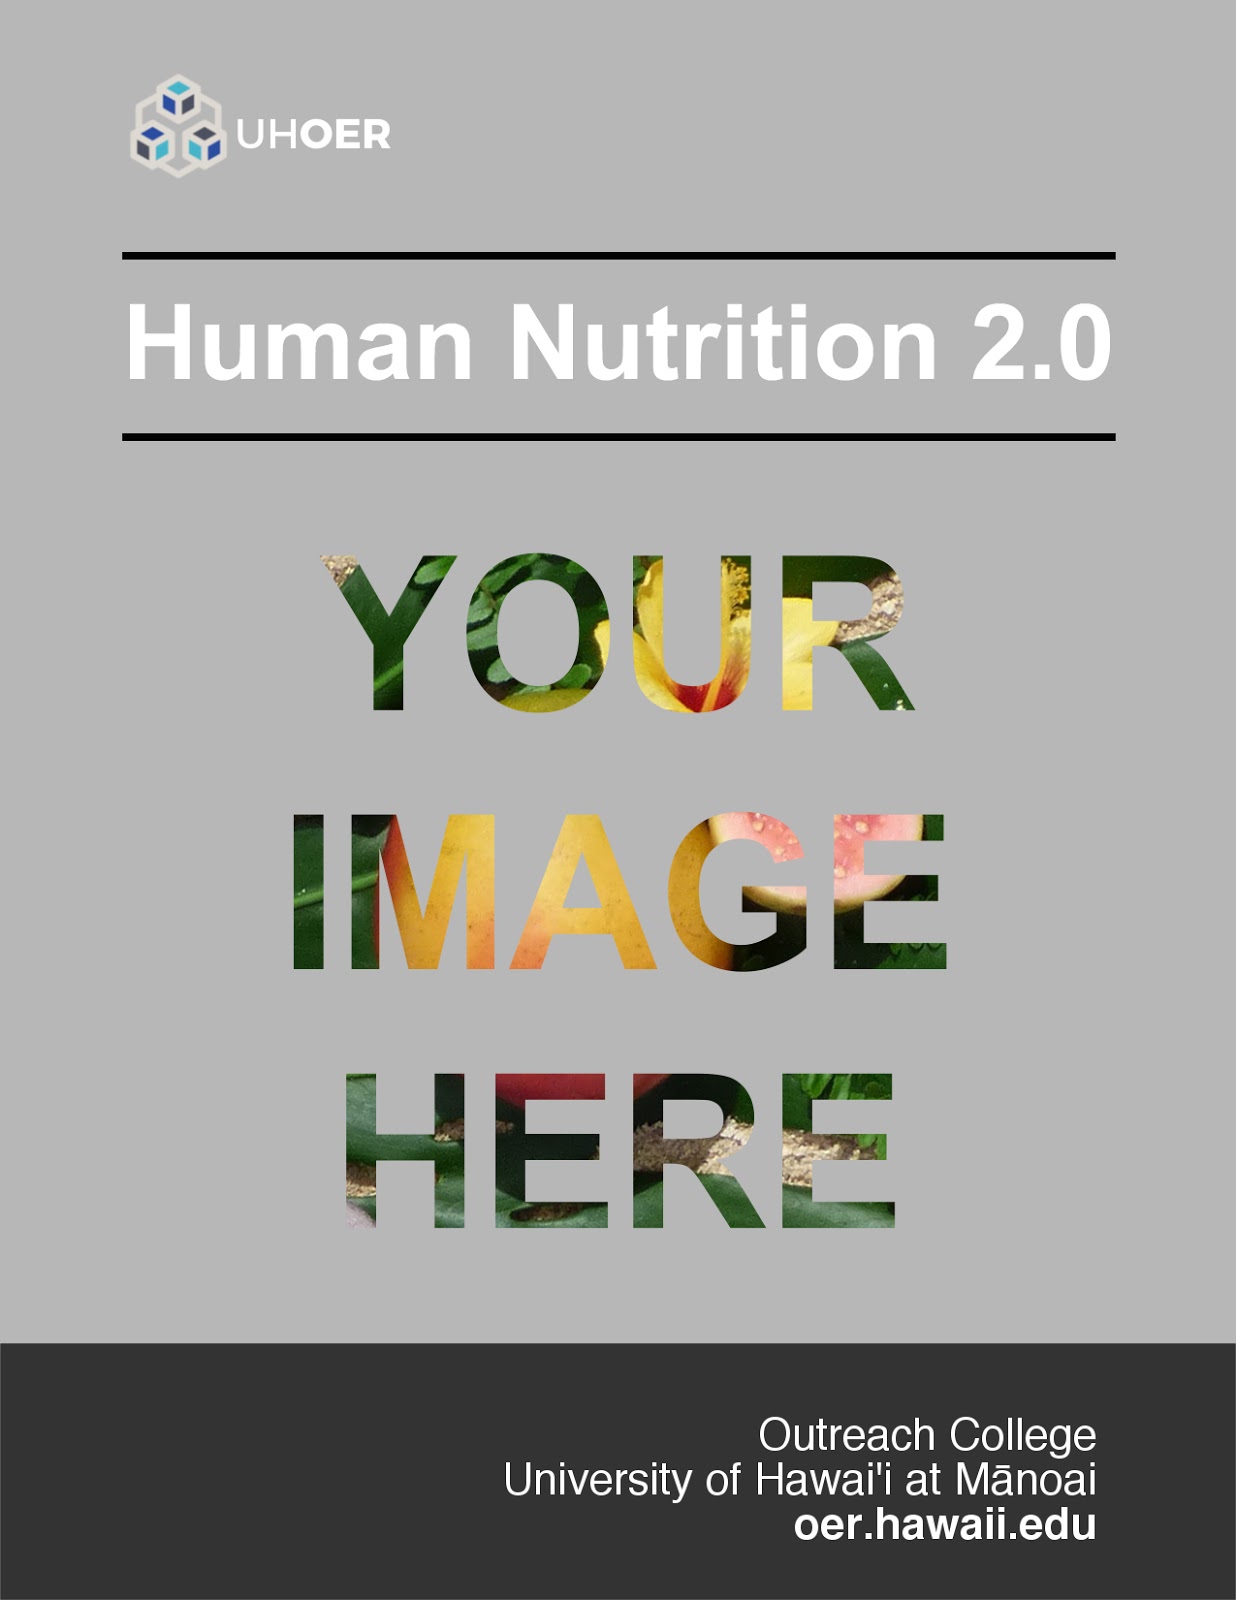 Human Nutrition 2.0!